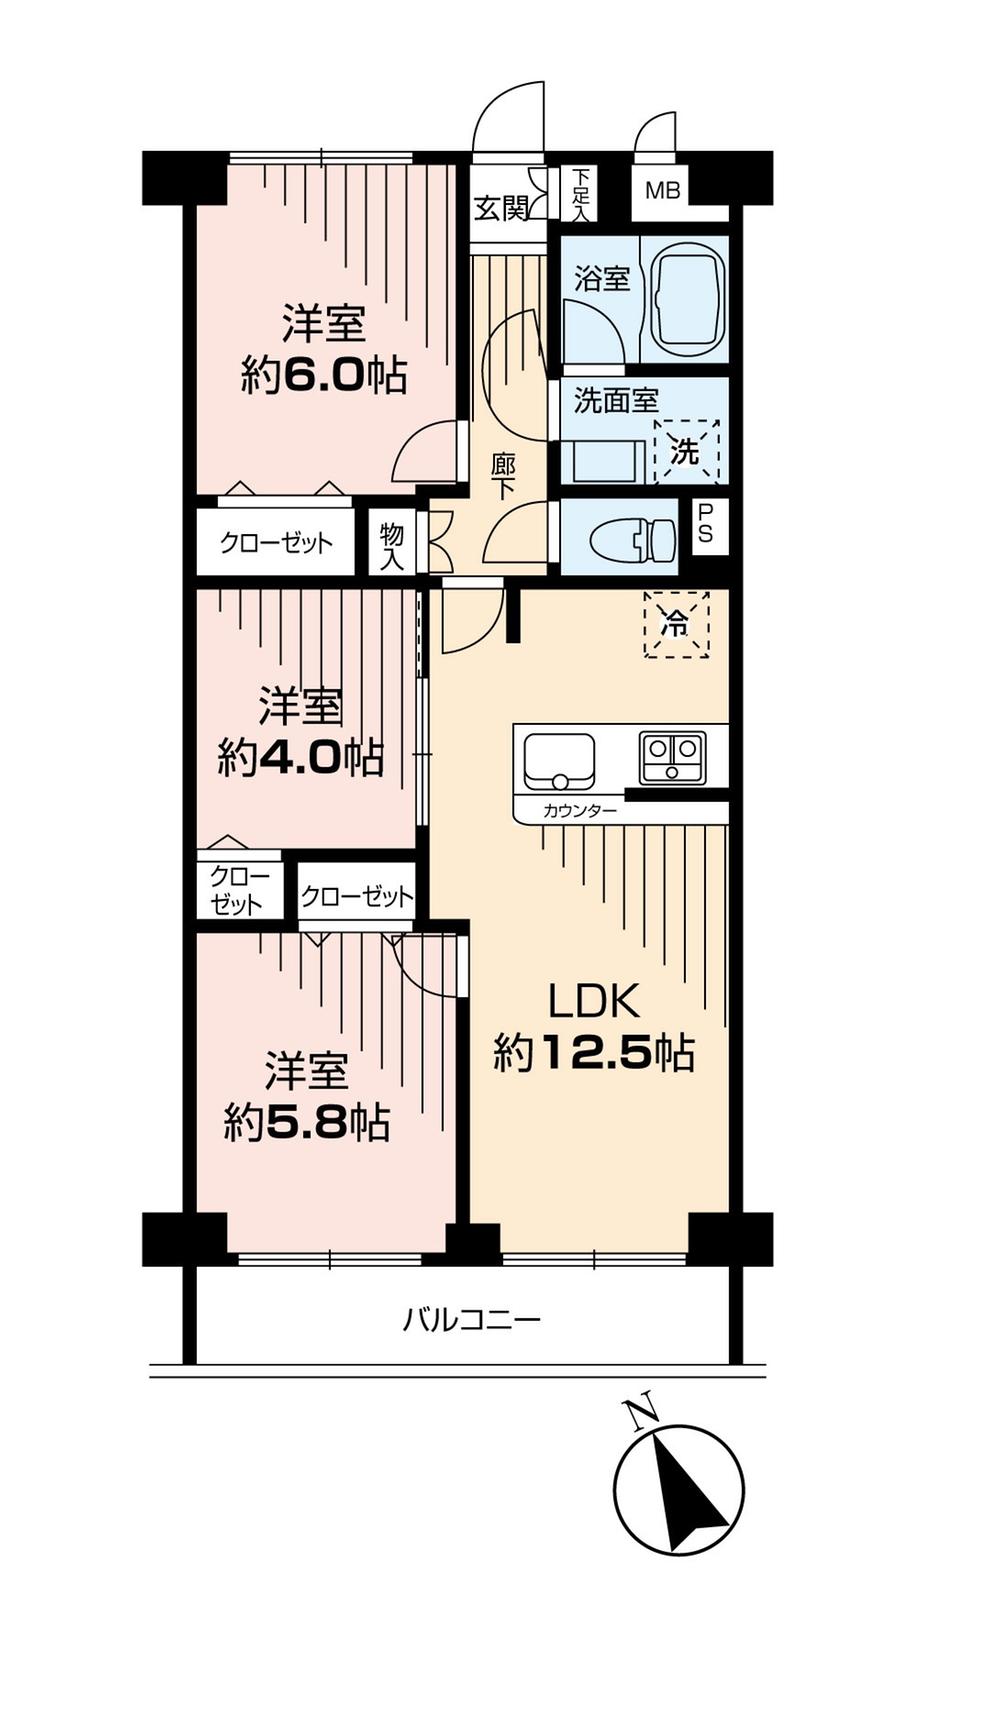 Floor plan. 3LDK, Price 19,800,000 yen, Occupied area 61.56 sq m , Balcony area 5.94 sq m